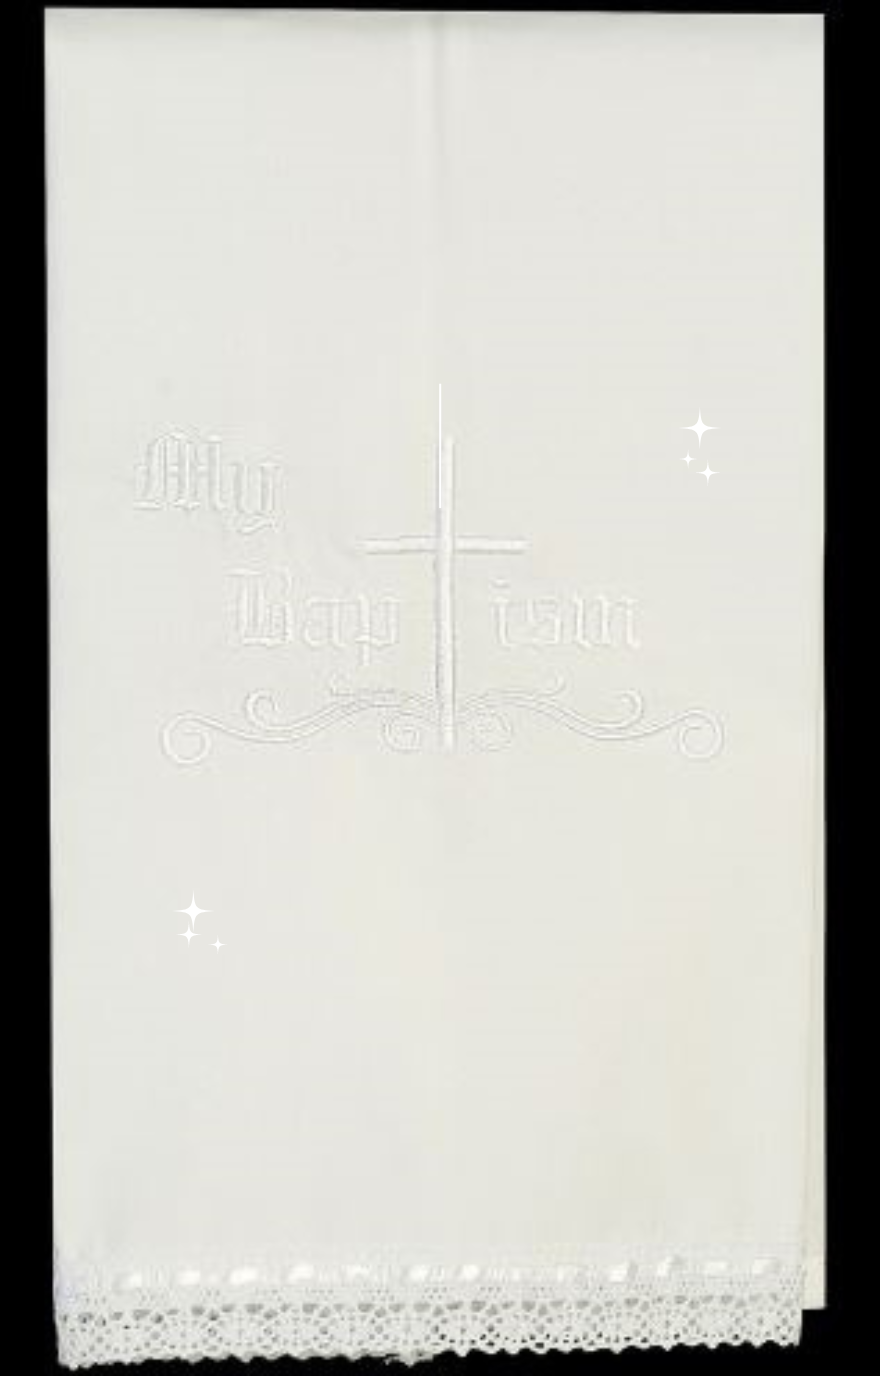 B106 Small Baptism Towel: WHITE